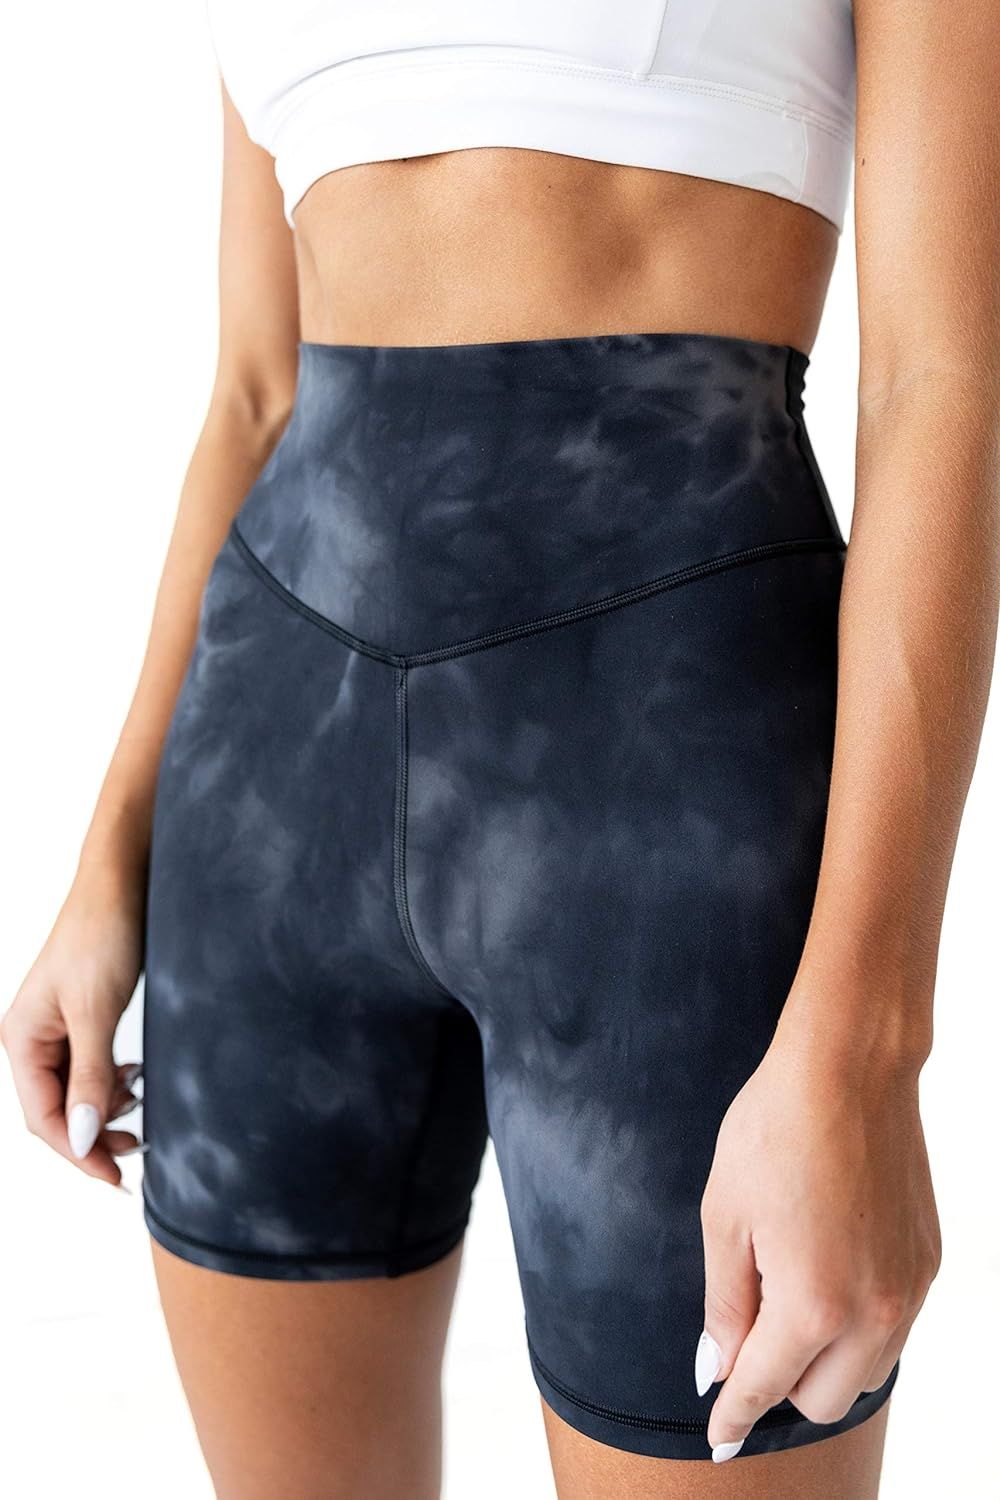 Kamo Fitness Ellyn High Waisted Yoga Shorts 6" Inseam Butt Lifting Tie Dye Soft Workout Pants Tum... | Amazon (US)